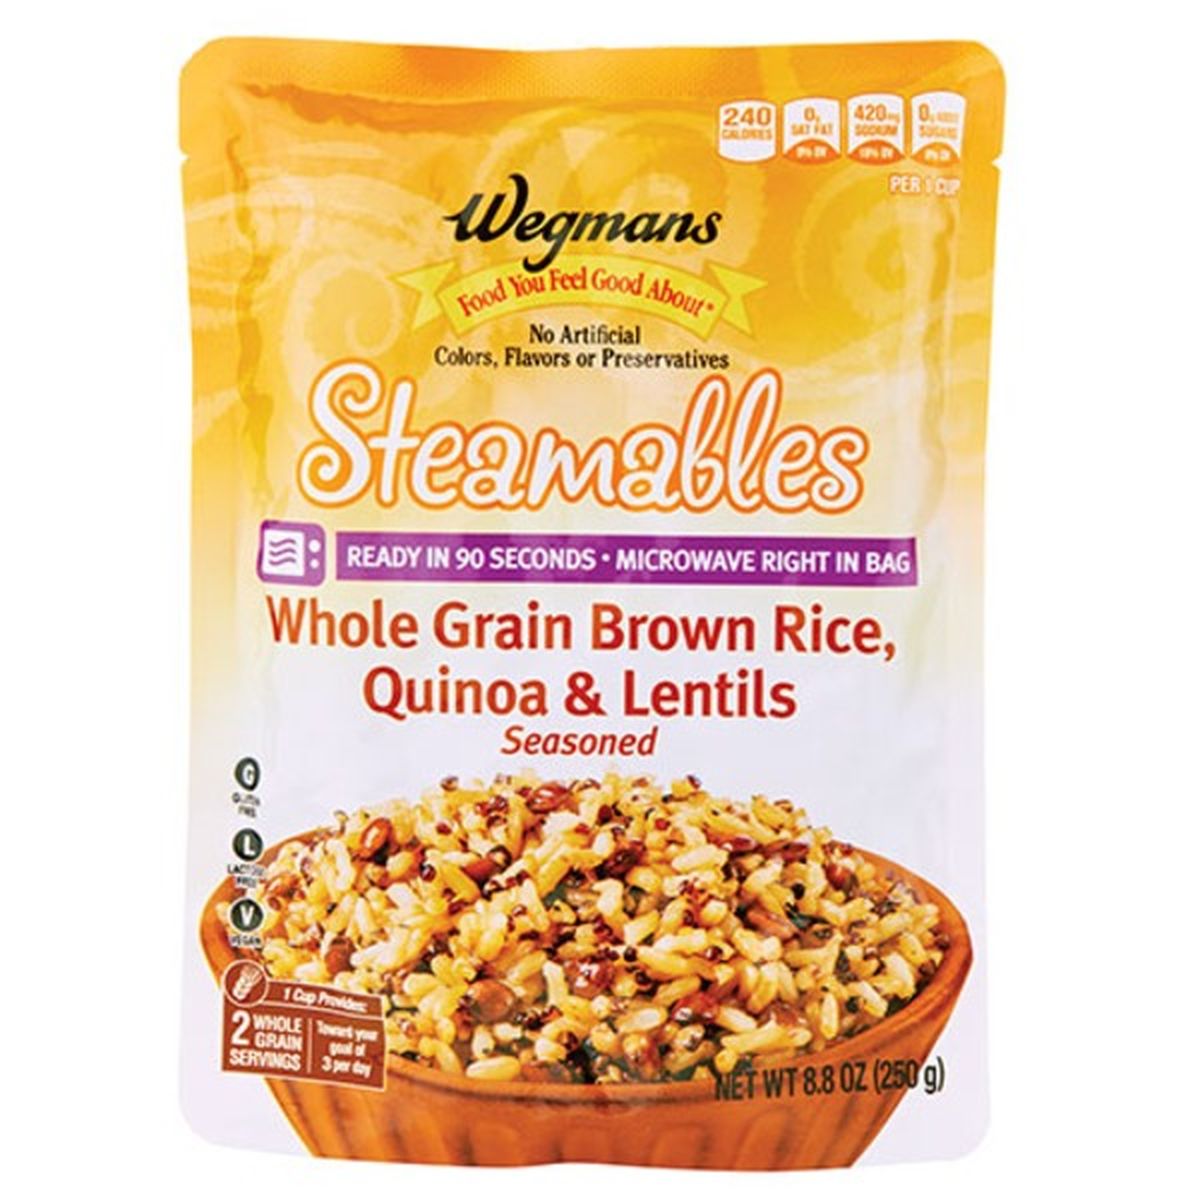 Calories in Wegmans Brown Rice, Quinoa & Lentil Steamables